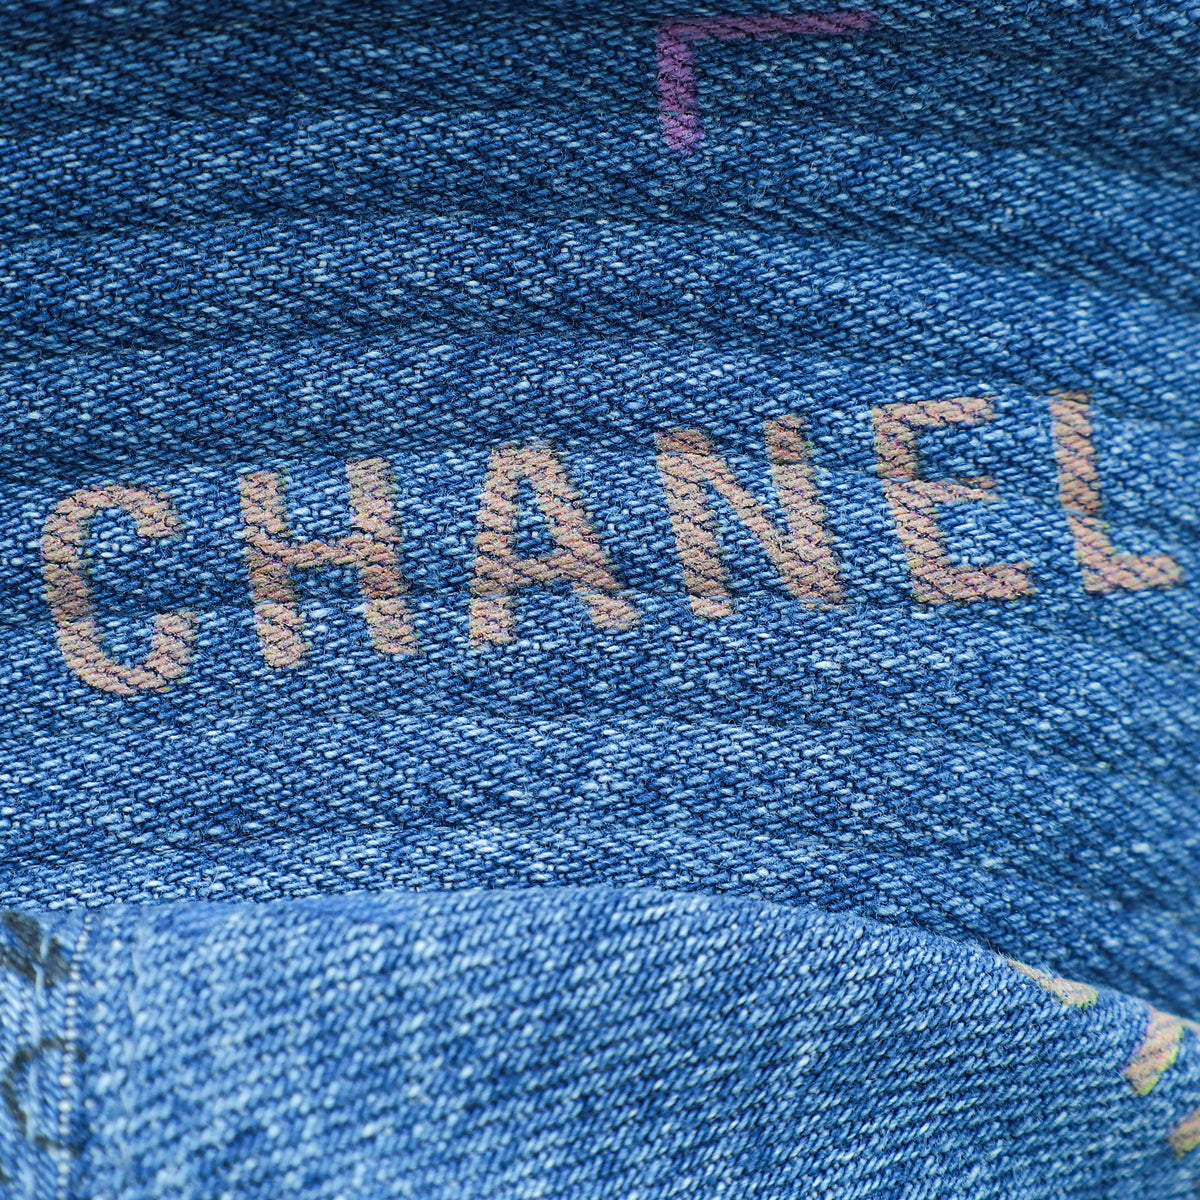 Chanel Blue Denim Mood Cloche Small Bucket Hat